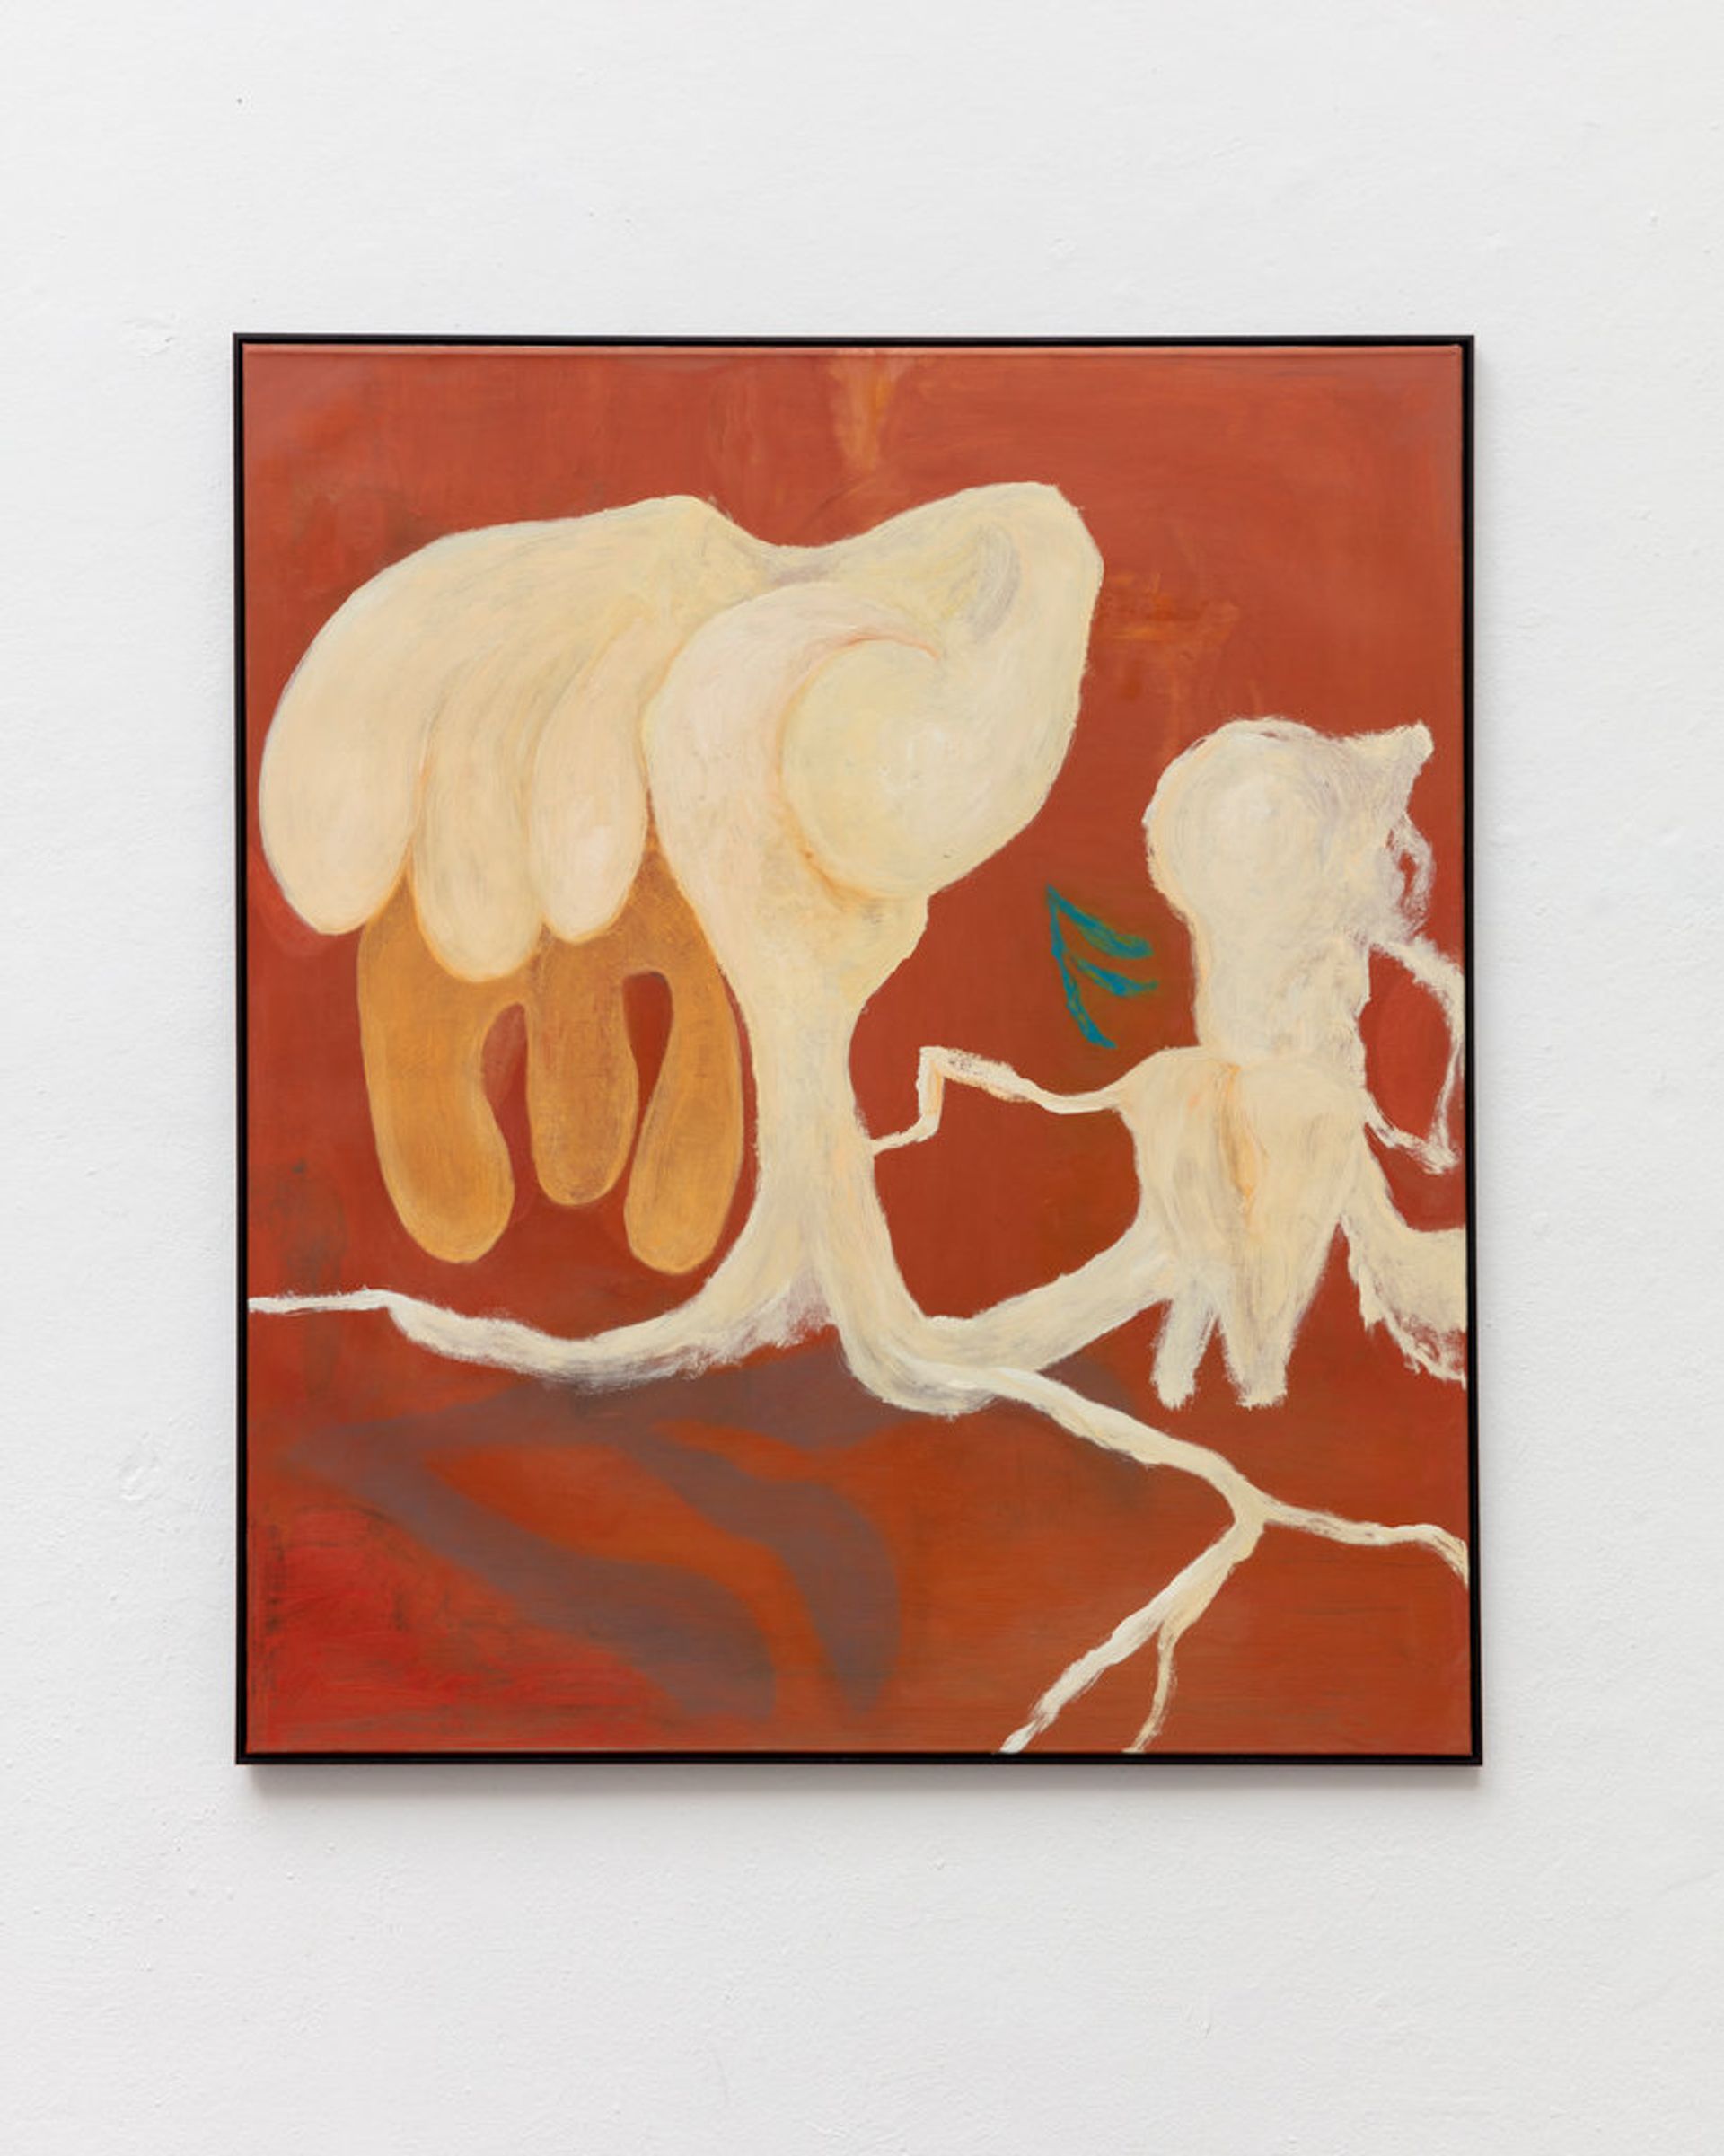 Veronika Hilger, Untitled, 2020, oil on canvas, 150 × 130 cm